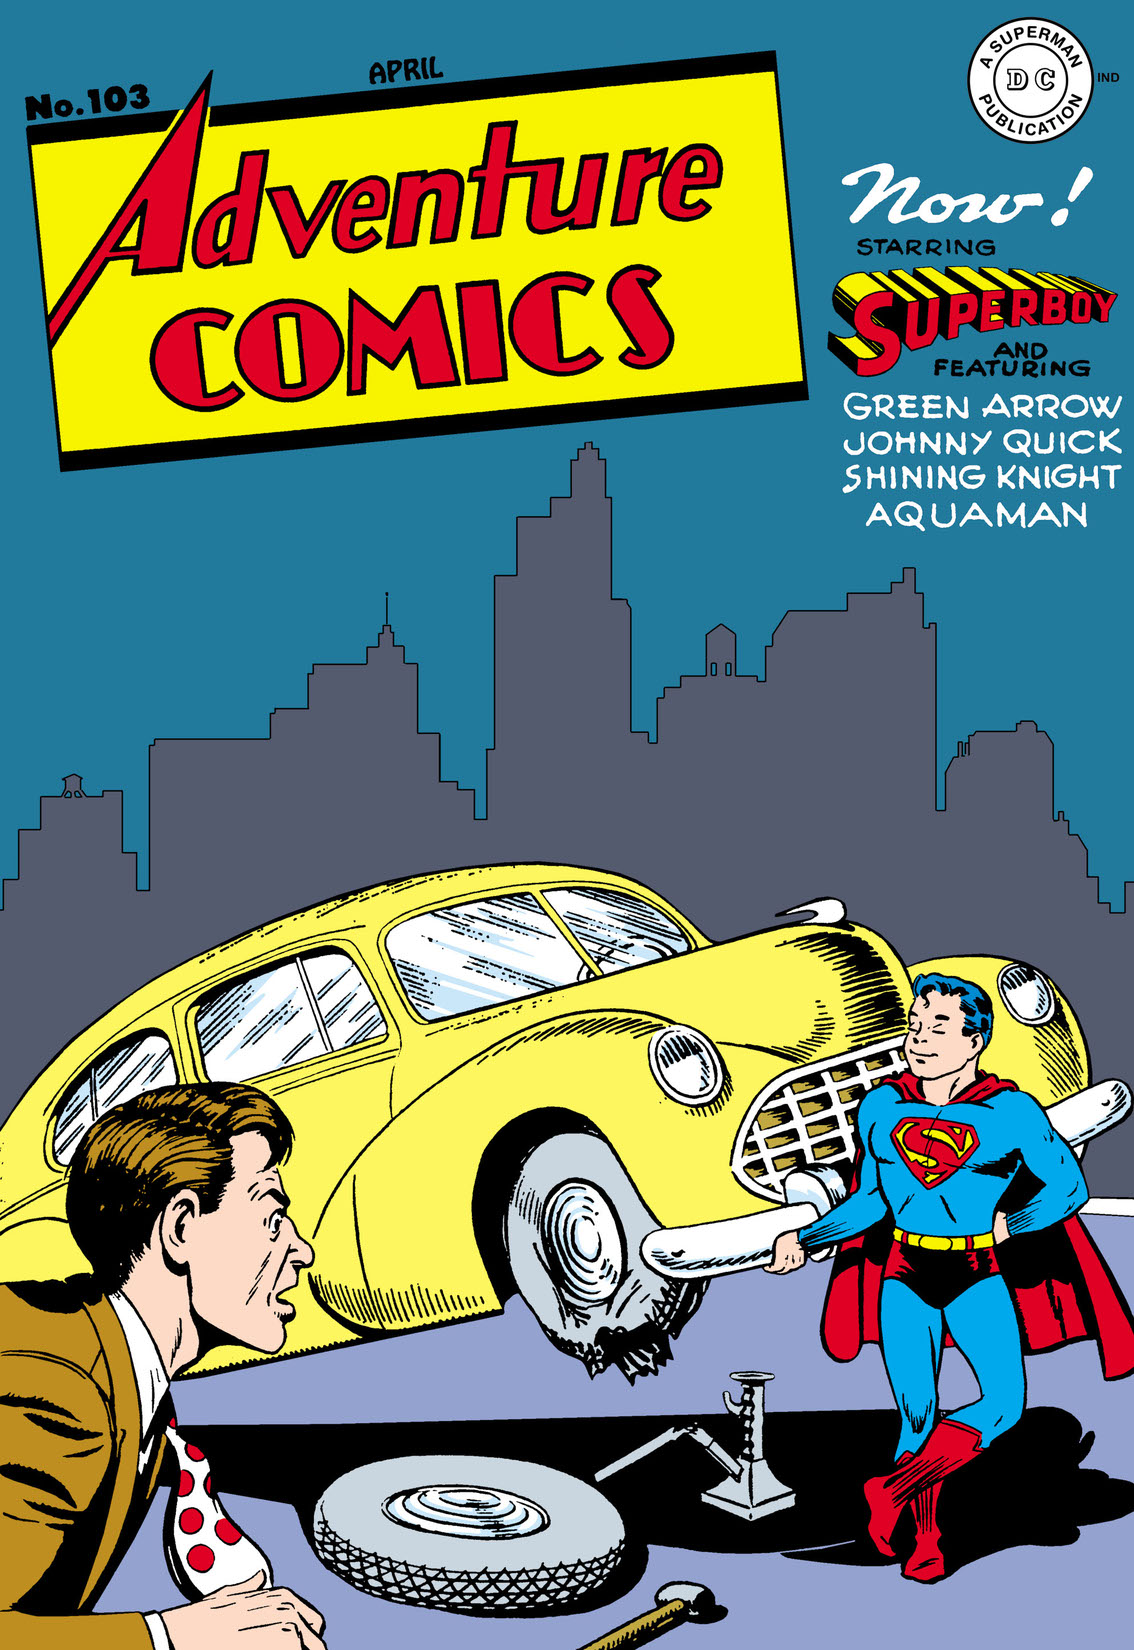 Adventure Comics (1938-) #103 preview images